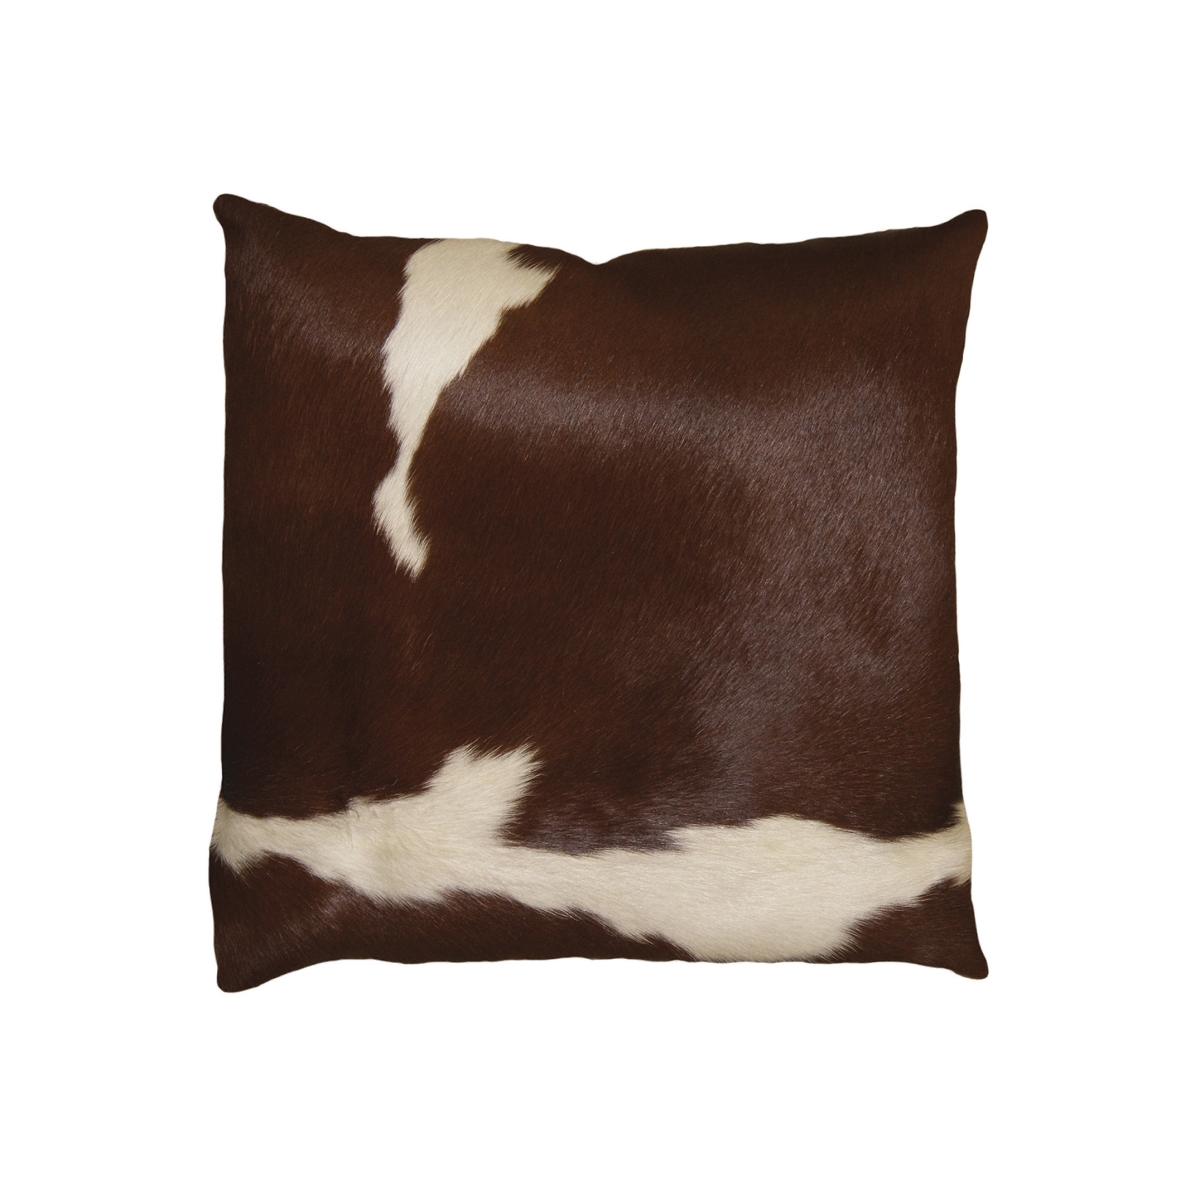 676685000026 18 X 18 In. Torino Kobe Cowhide Pillow - Brown & White